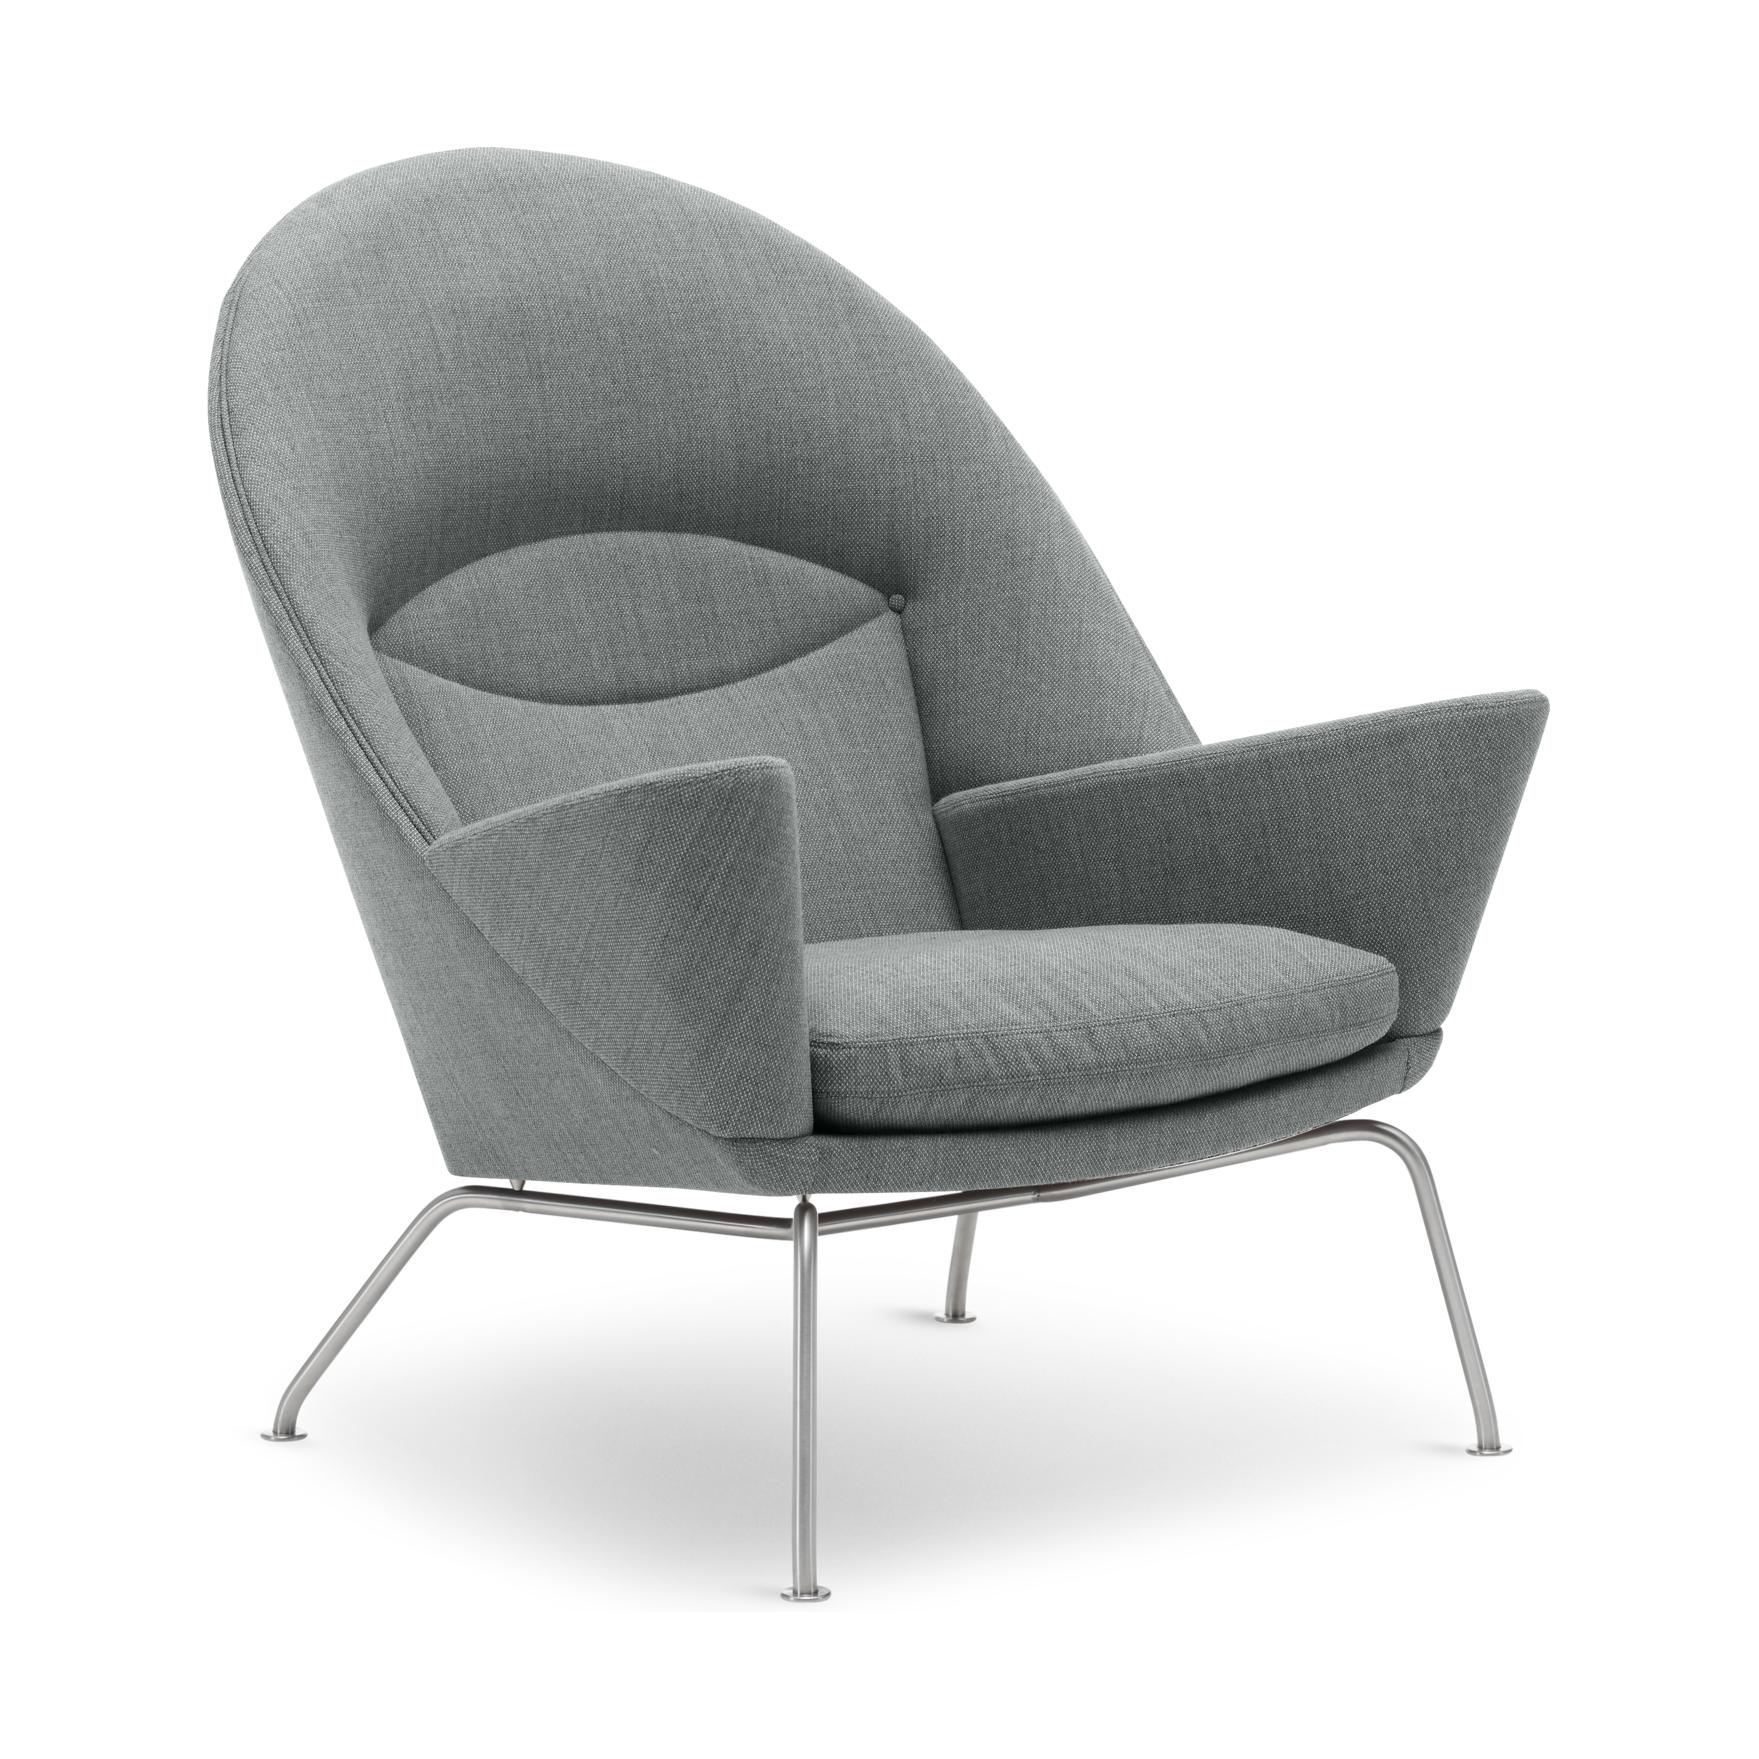 Carl Hansen CH468 OCULUS -stol, stål/lysegrå stoff